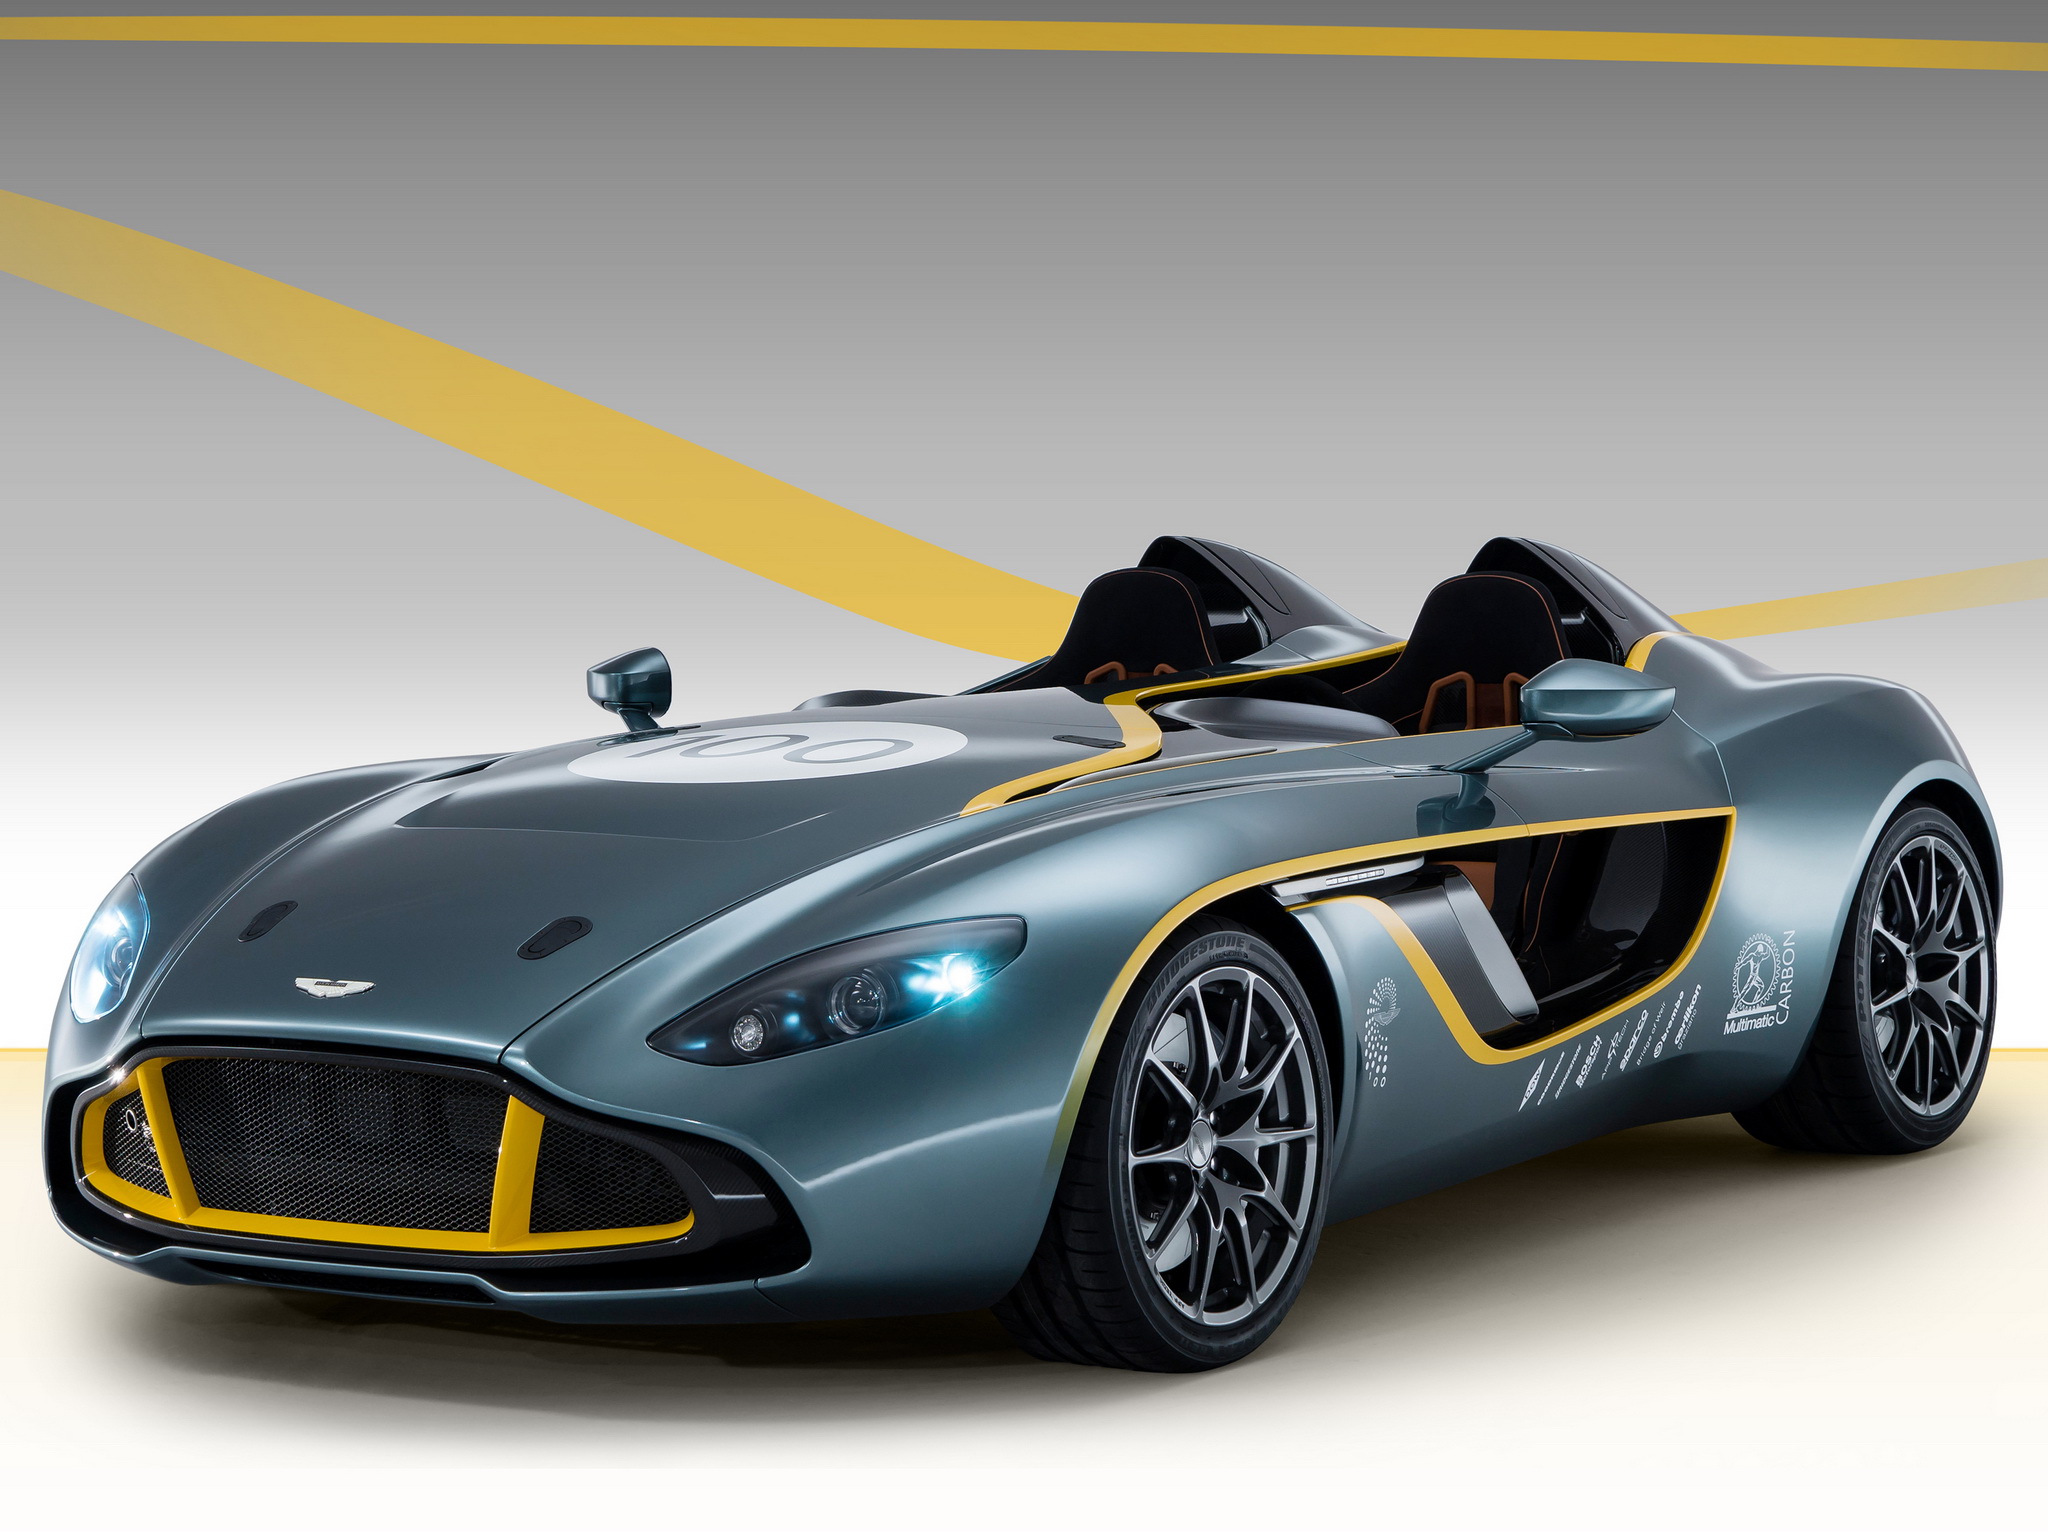 Descarga gratis la imagen Aston Martin, Coche, Auto Concepto, Vehículos, 2013 Aston Martin Cc100 Speedster Concepto en el escritorio de tu PC